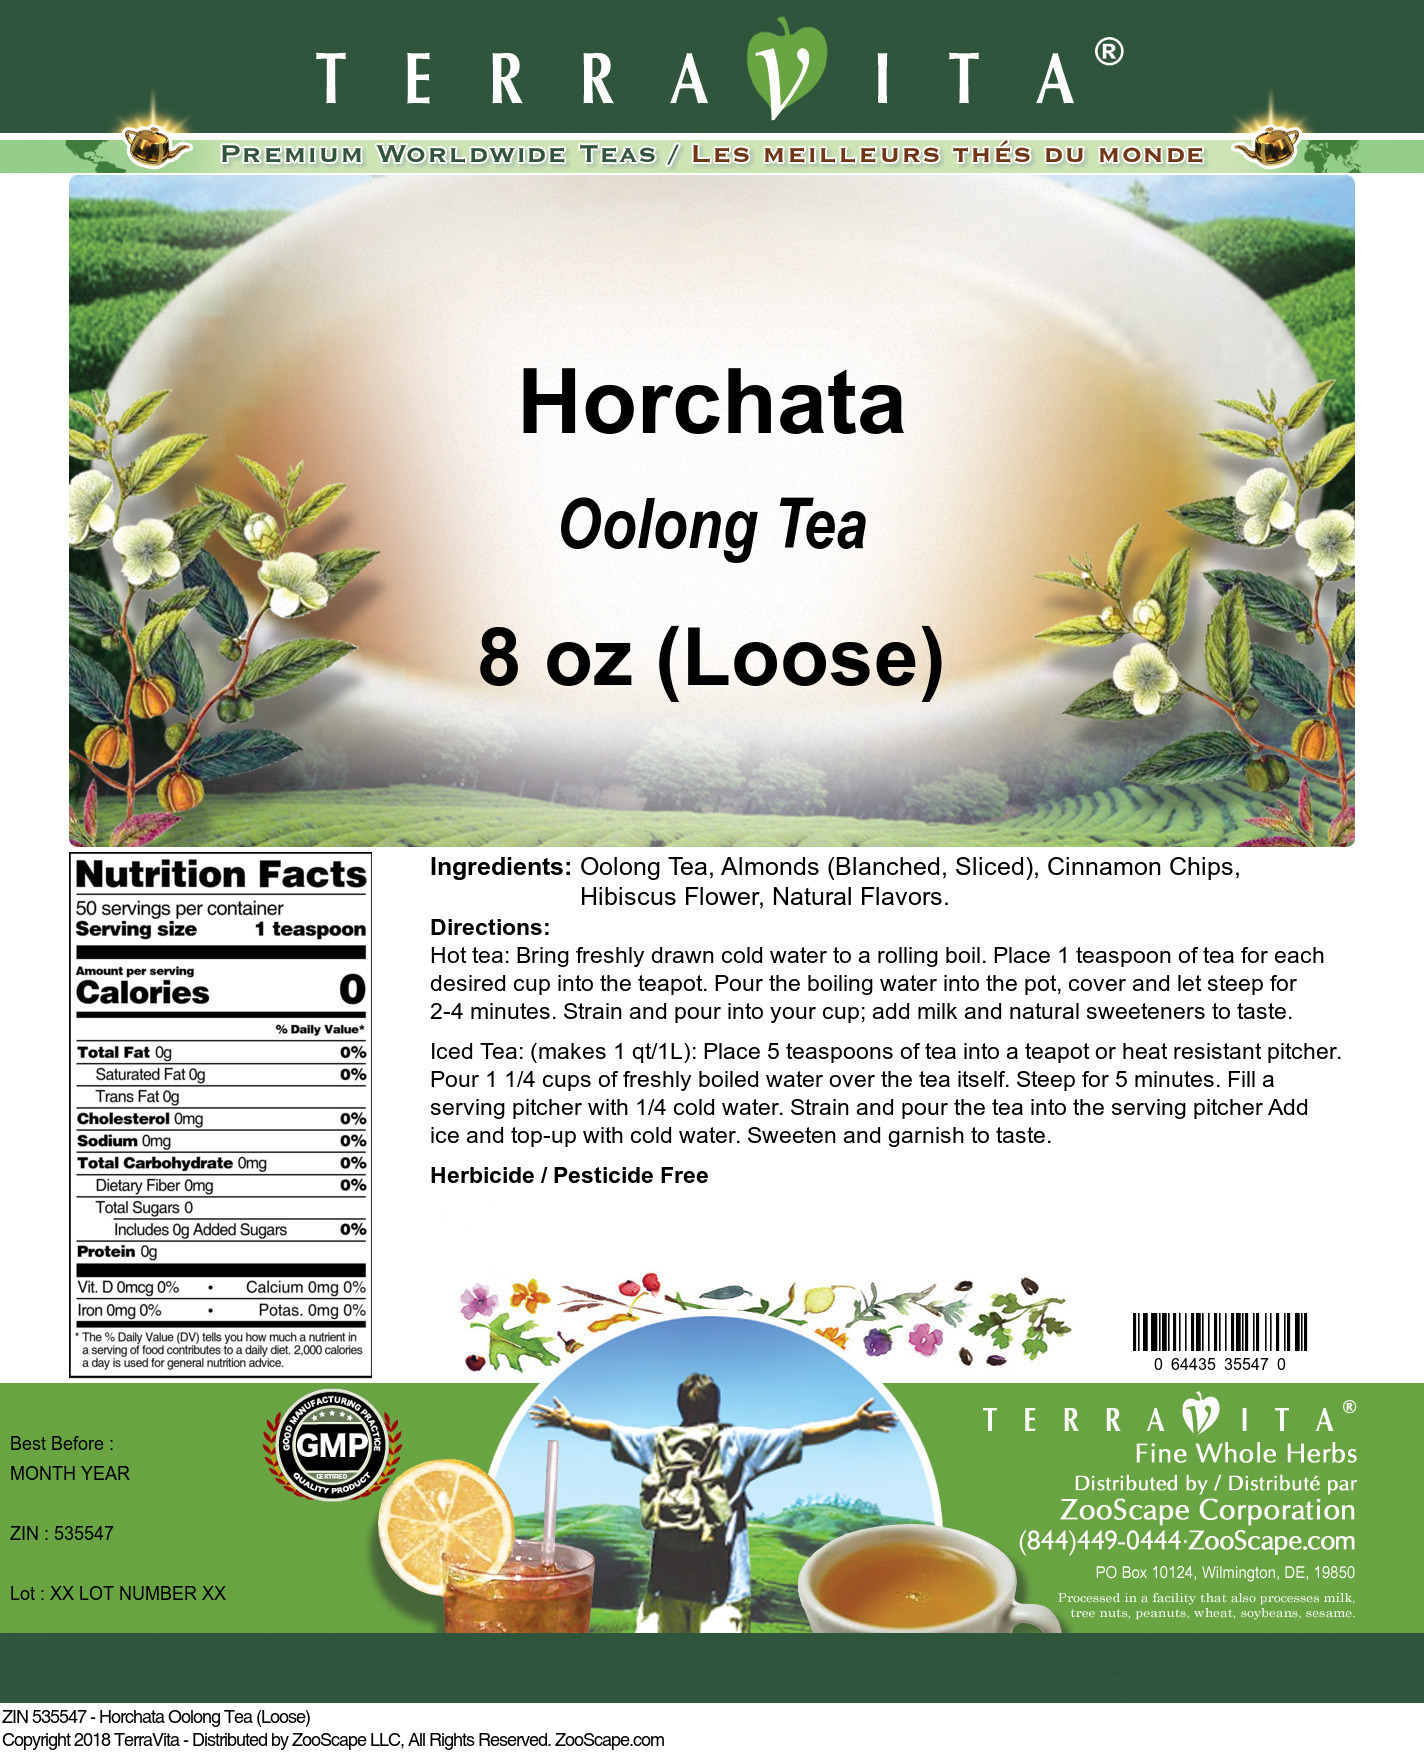 Horchata Oolong Tea (Loose) - Label